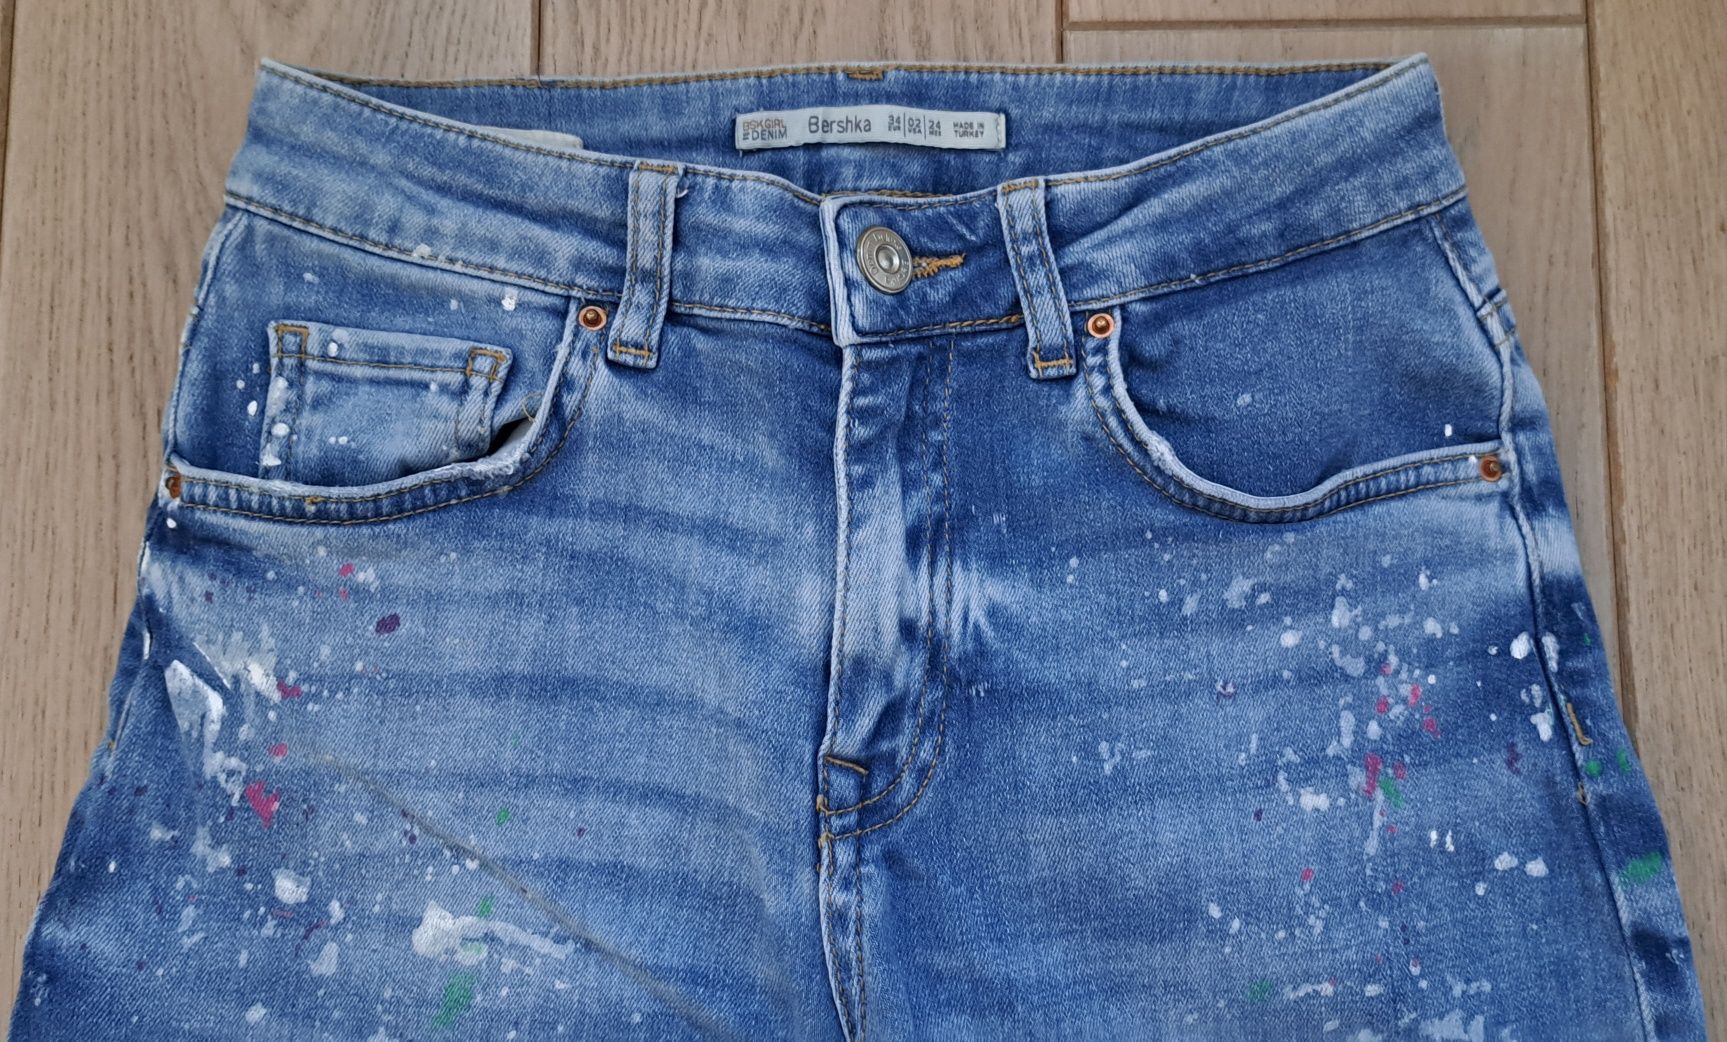 Bershka damskie jeansy 34